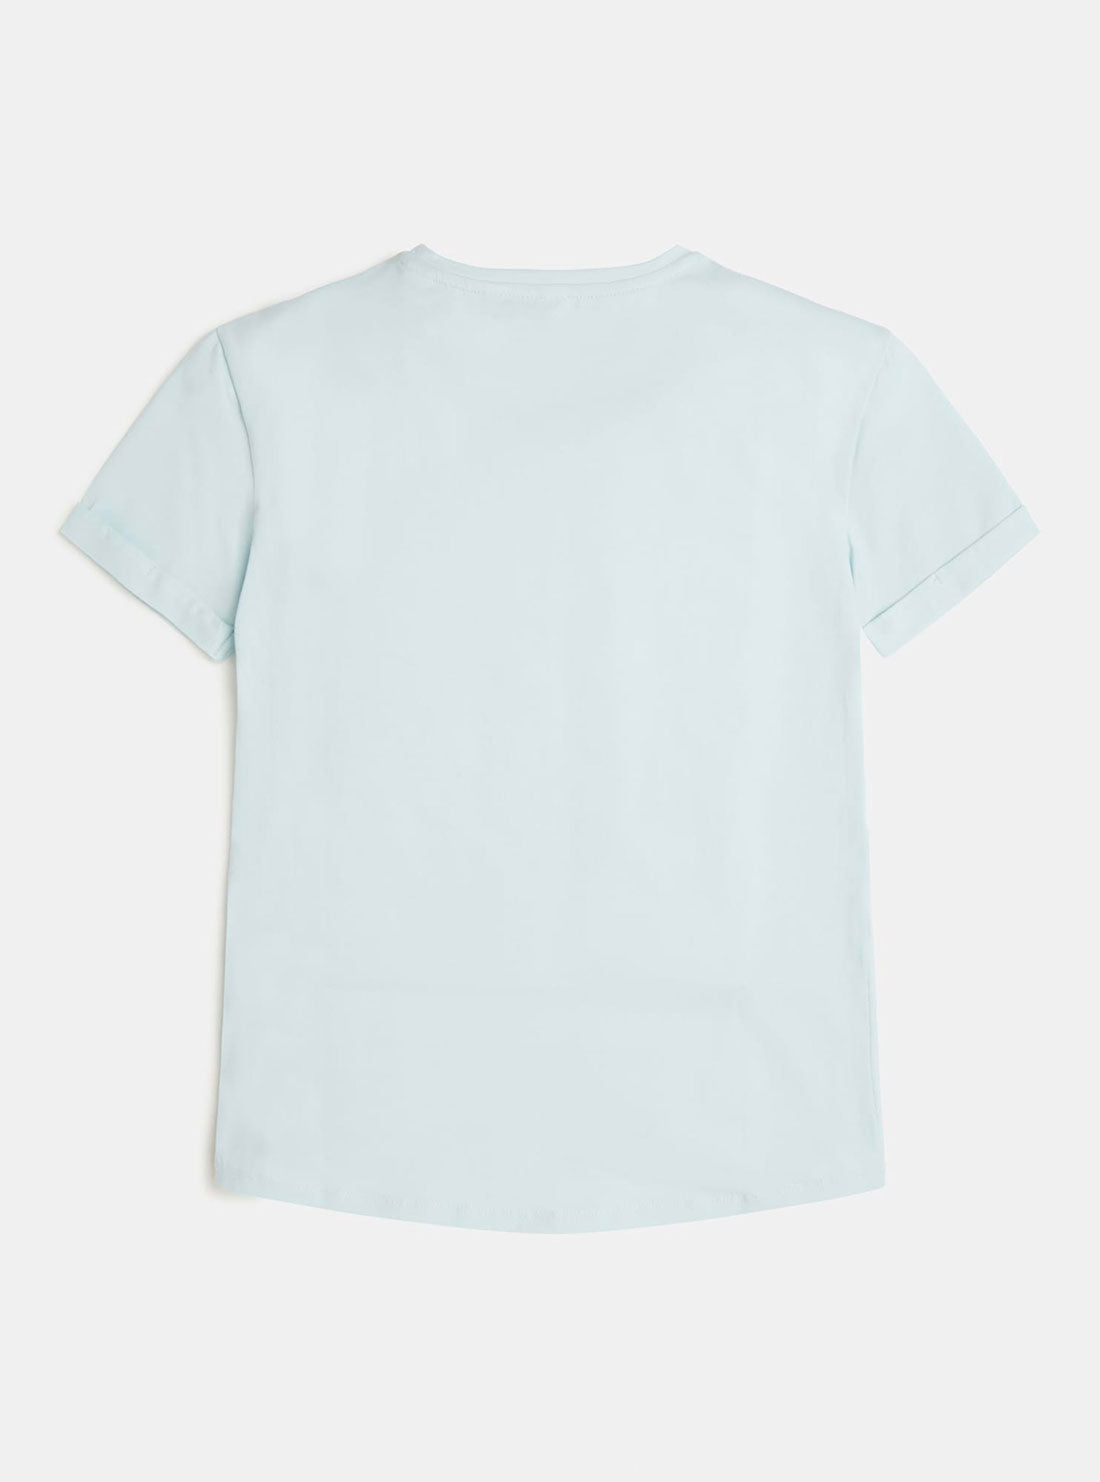 Green Reversible Sequin Logo T-Shirt (7-16)